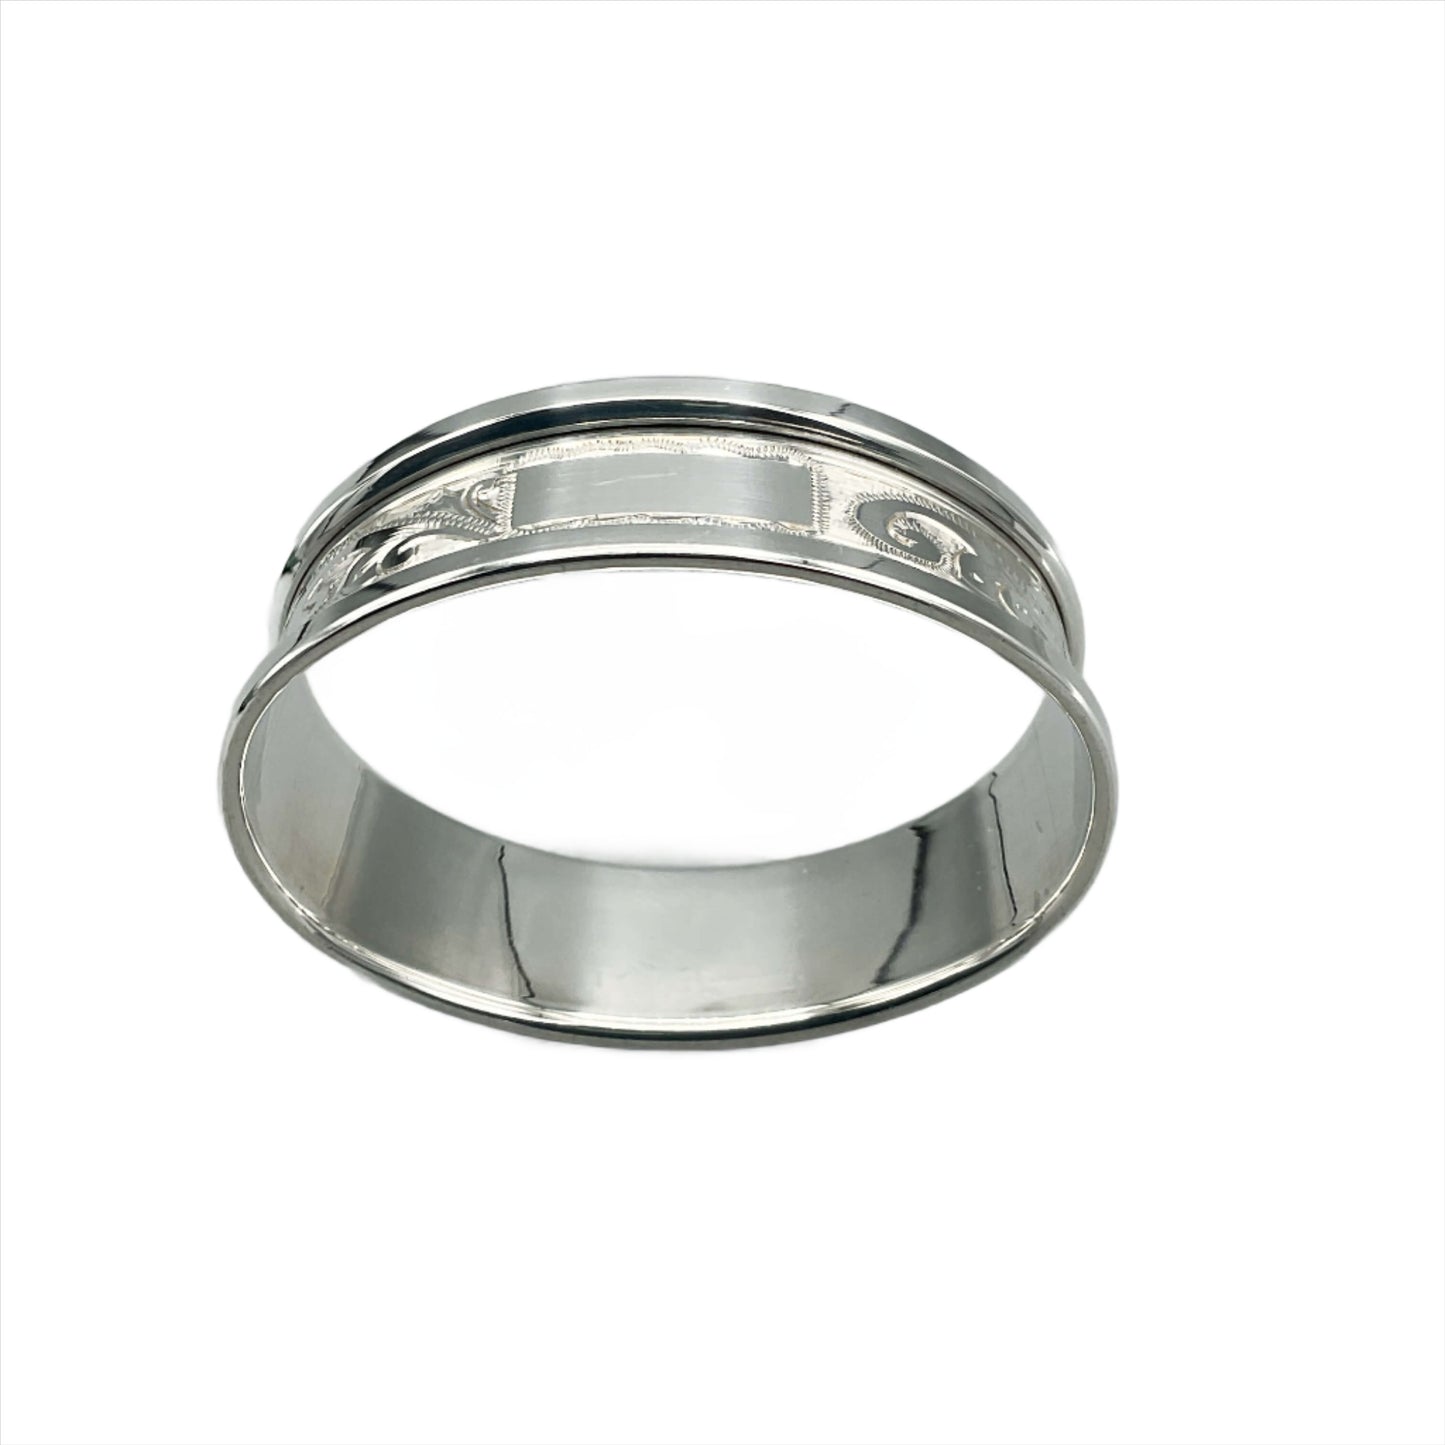 1974 Sterling Silver Napkin Ring